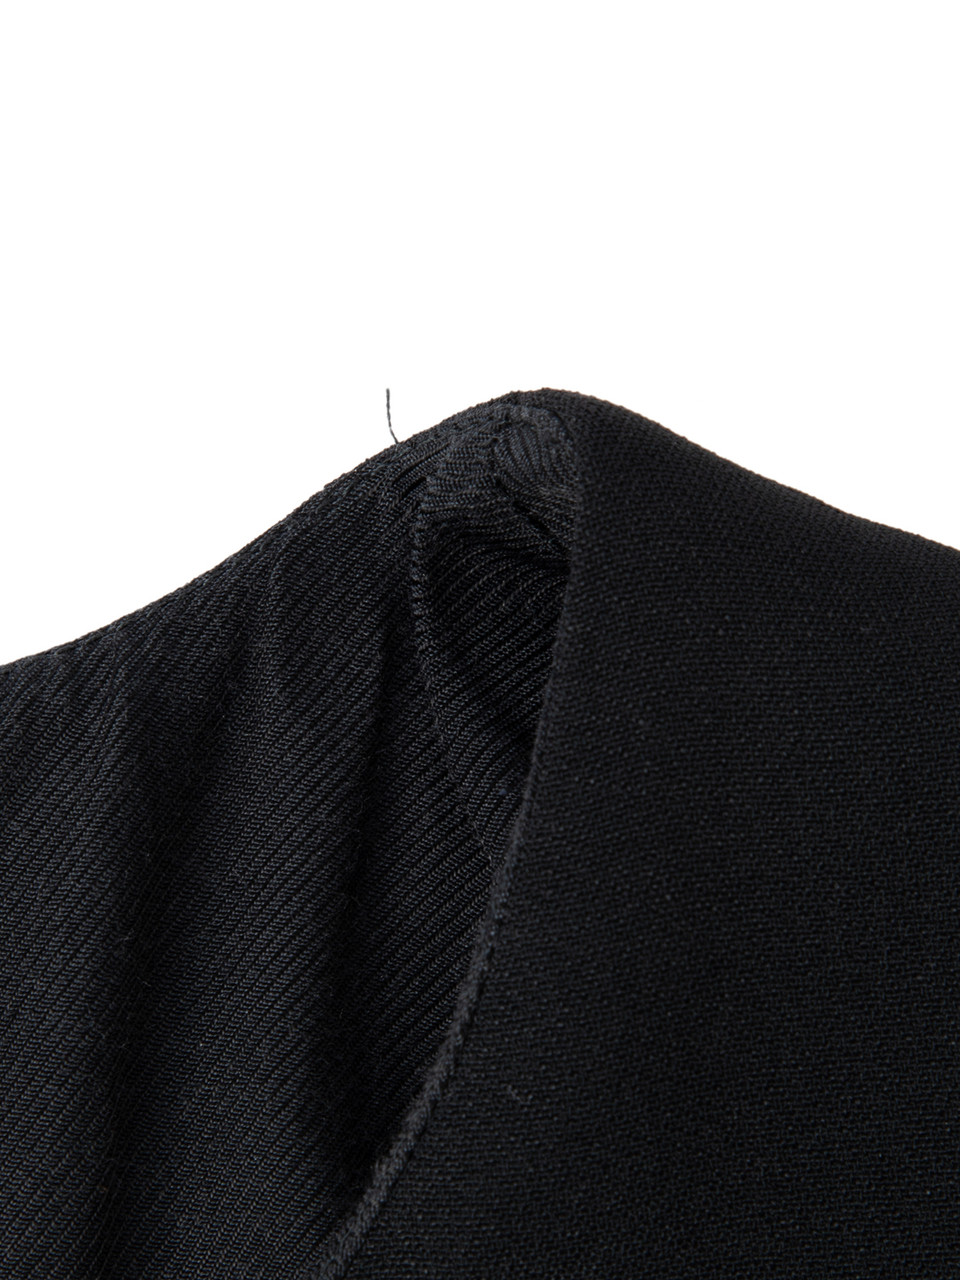 Stella McCartney Black Sleeveless Zipper Detail Dress